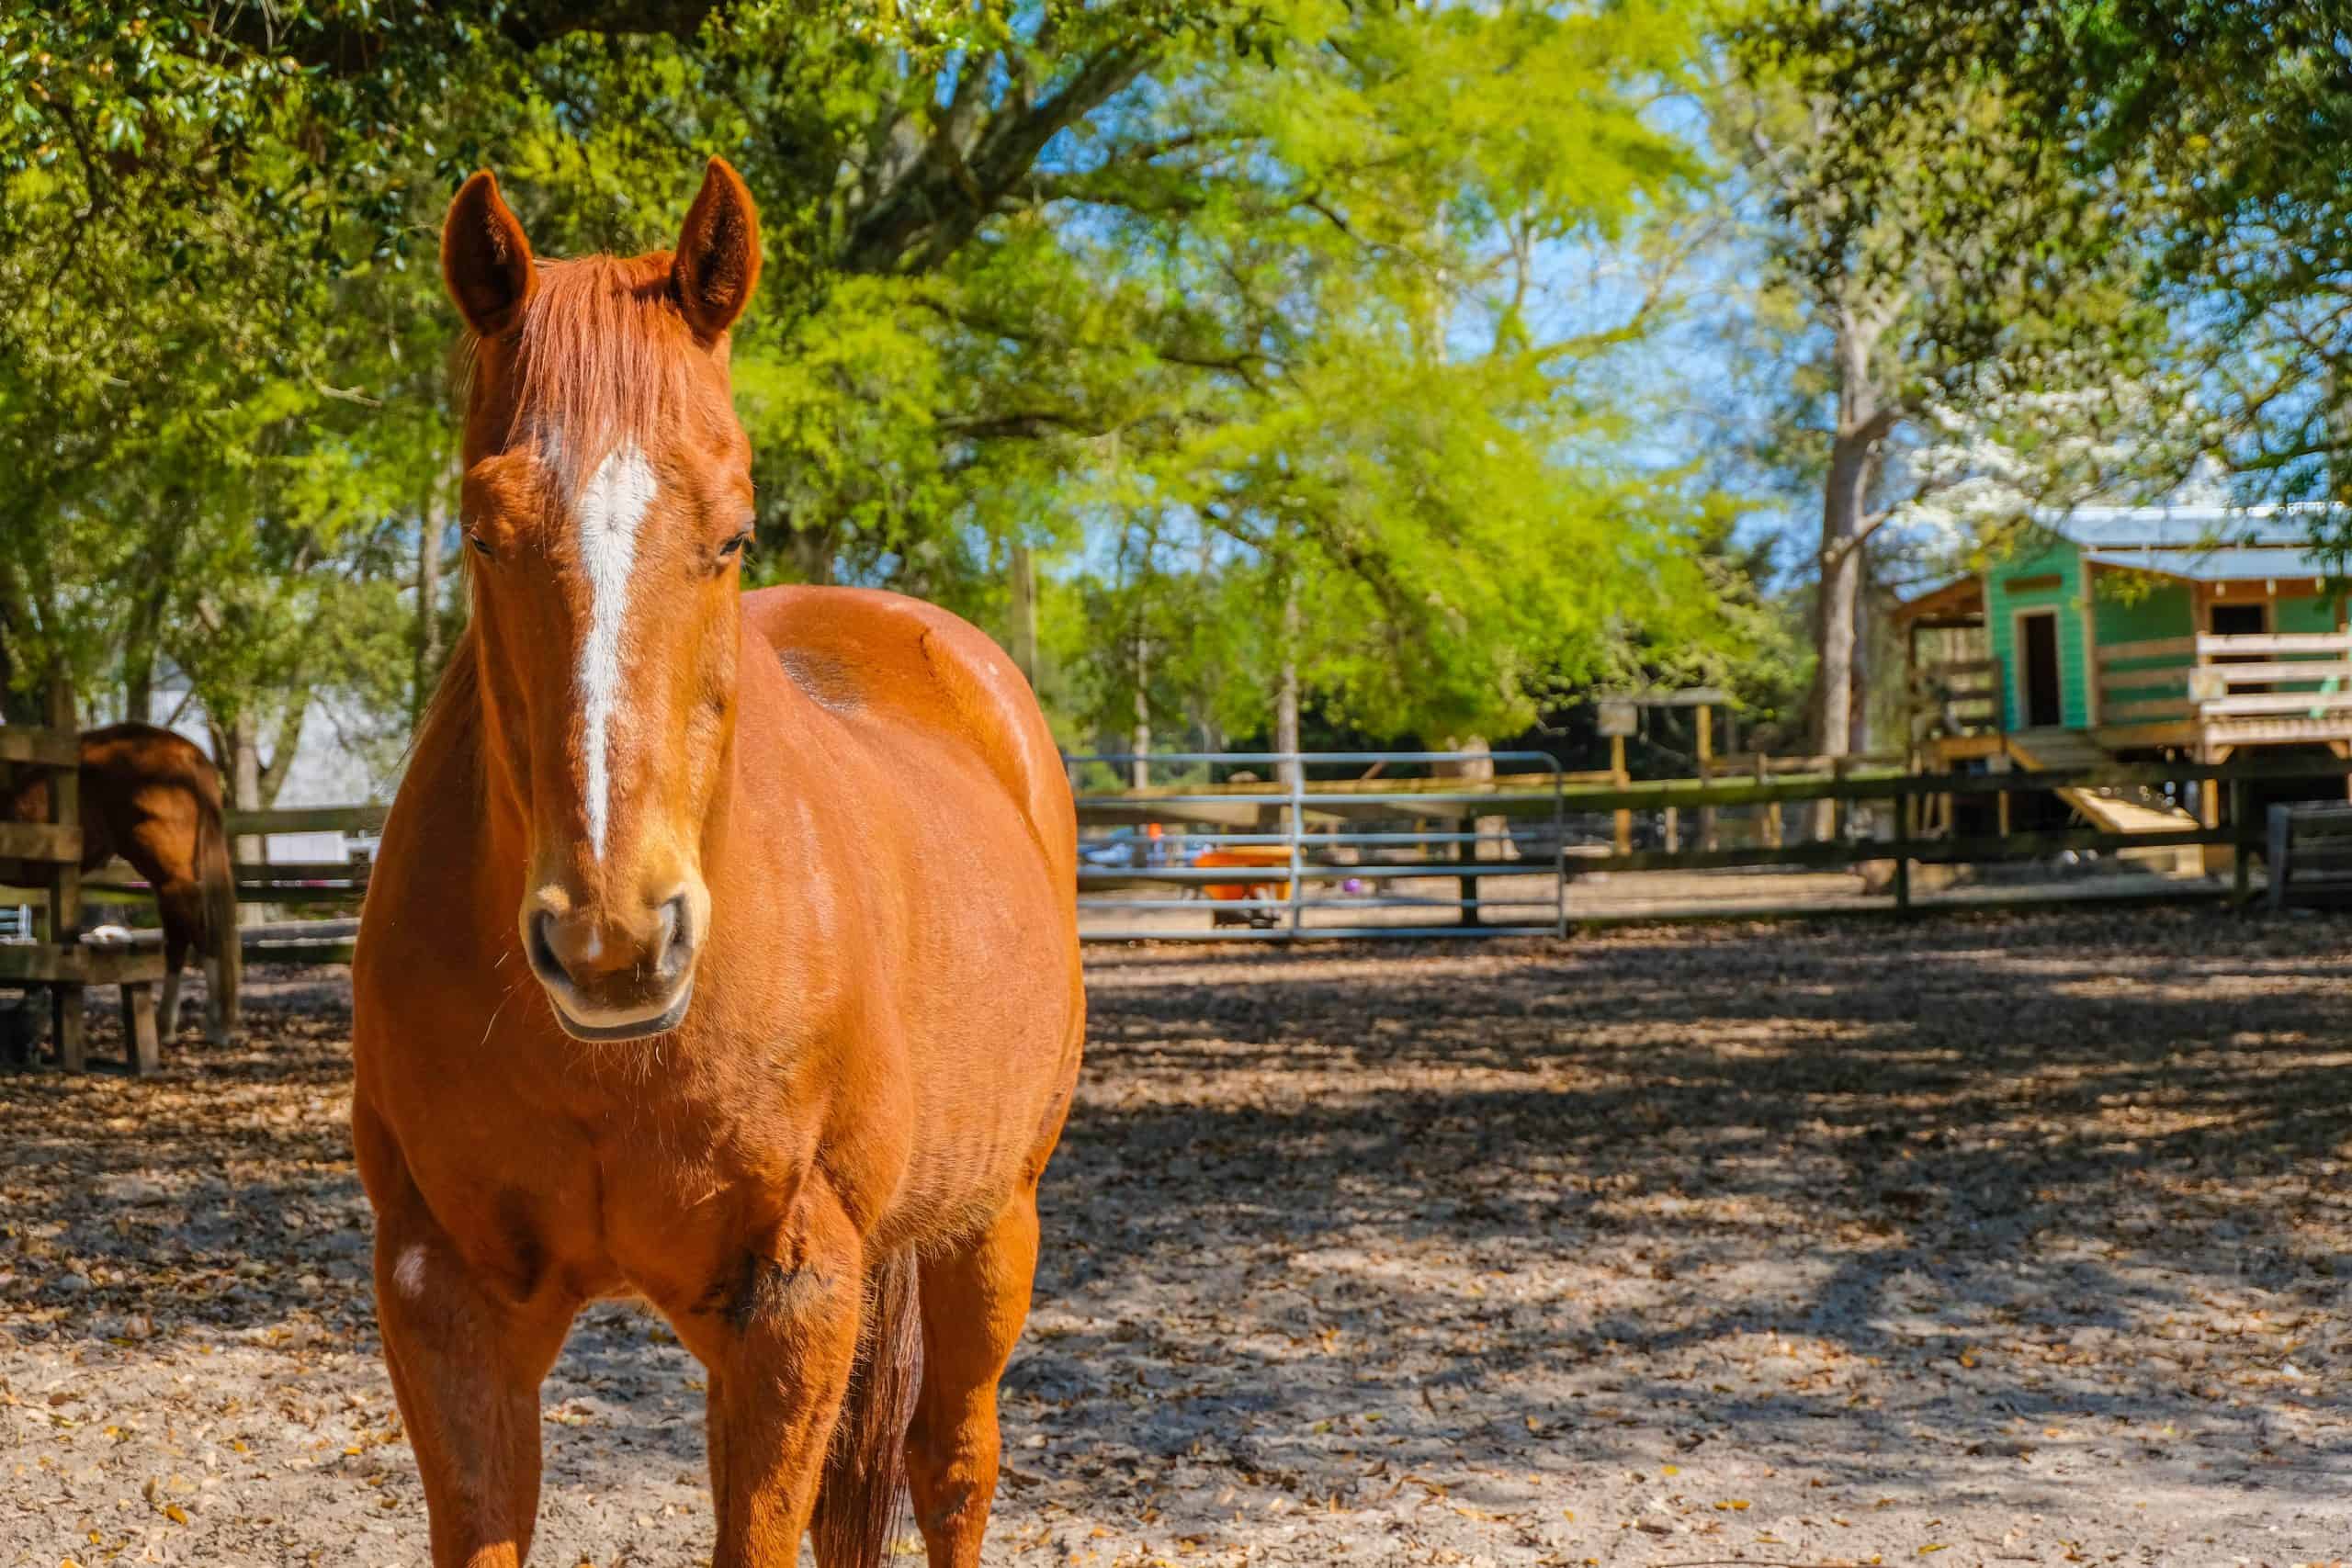 A rescue horse living on a rehabilitation ranch. South Carolina.